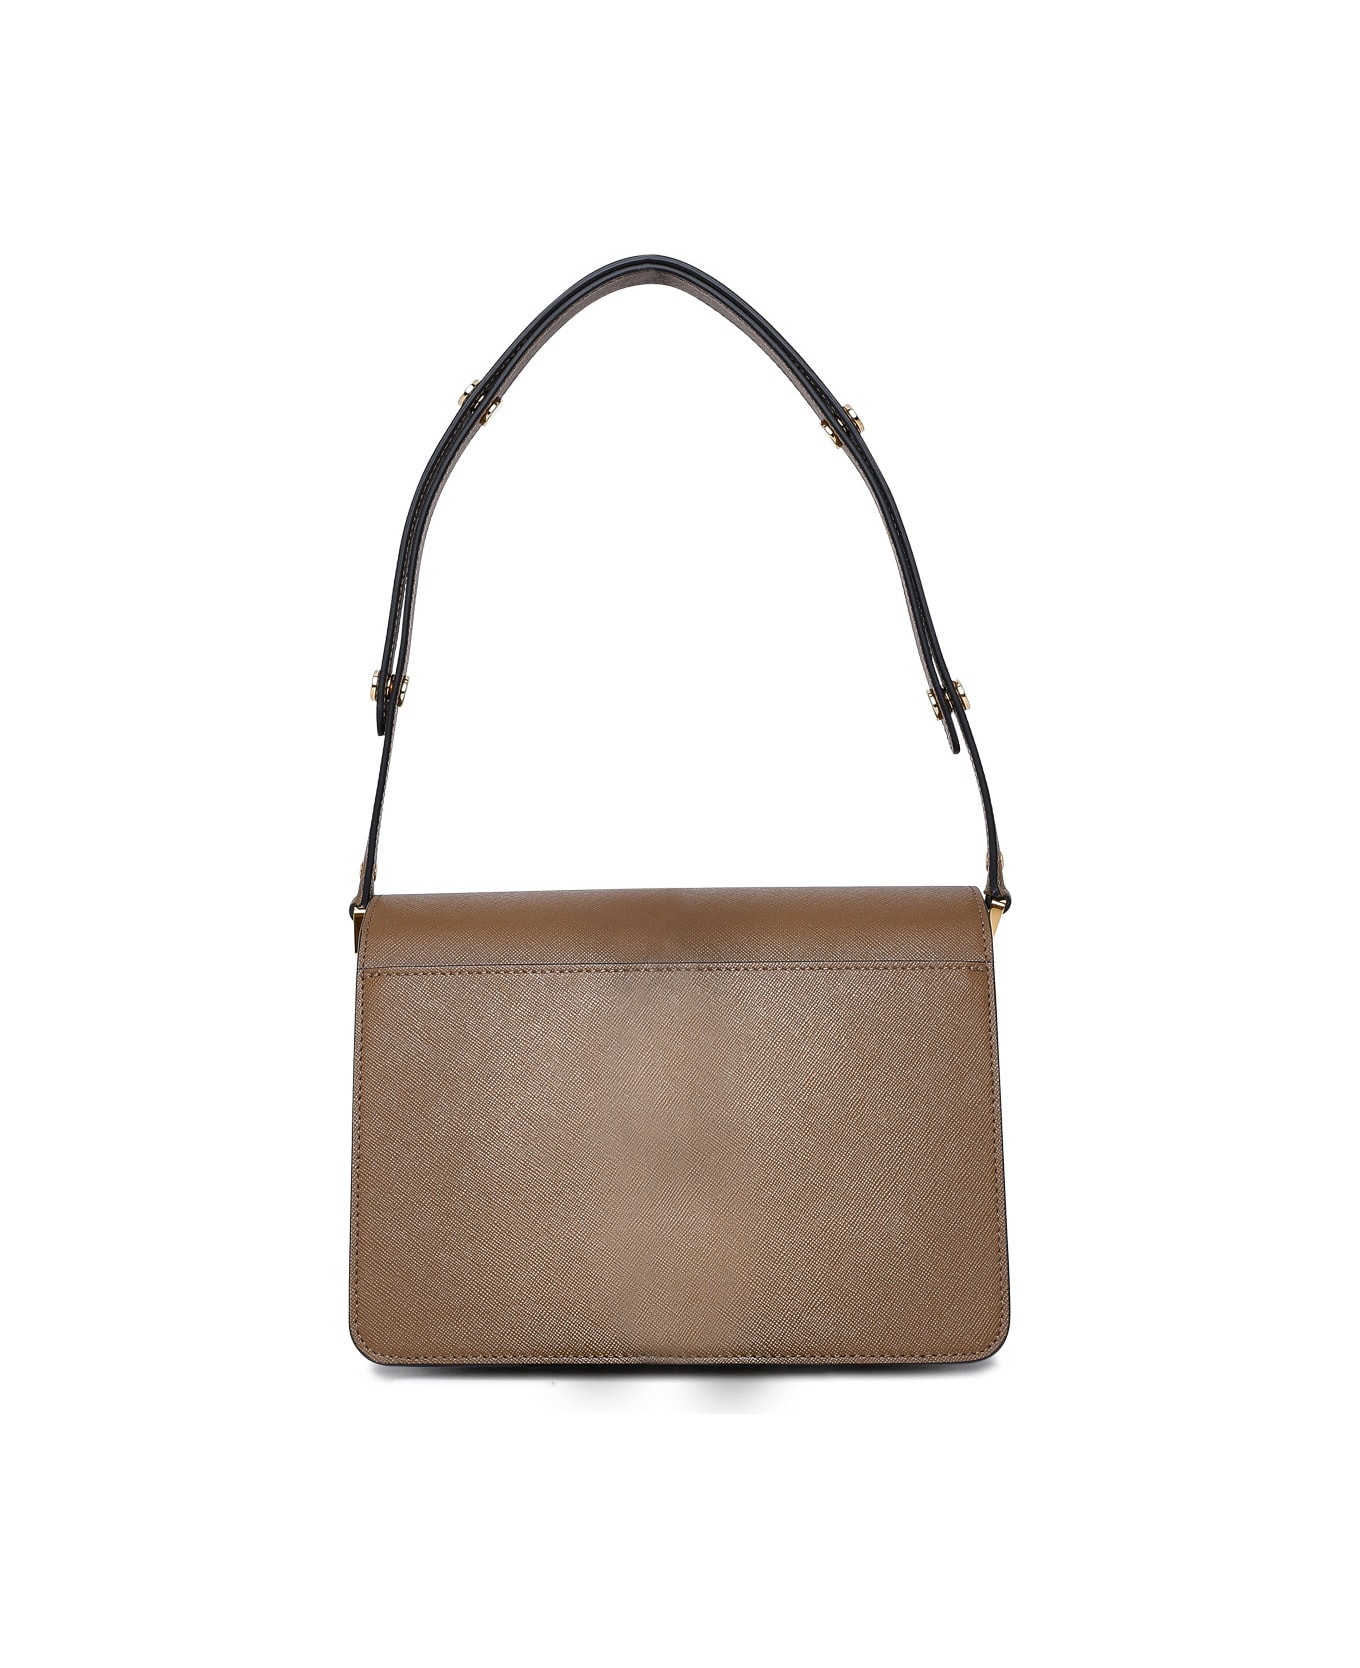 Marni Trunk Bag In Brown Leather - Brown